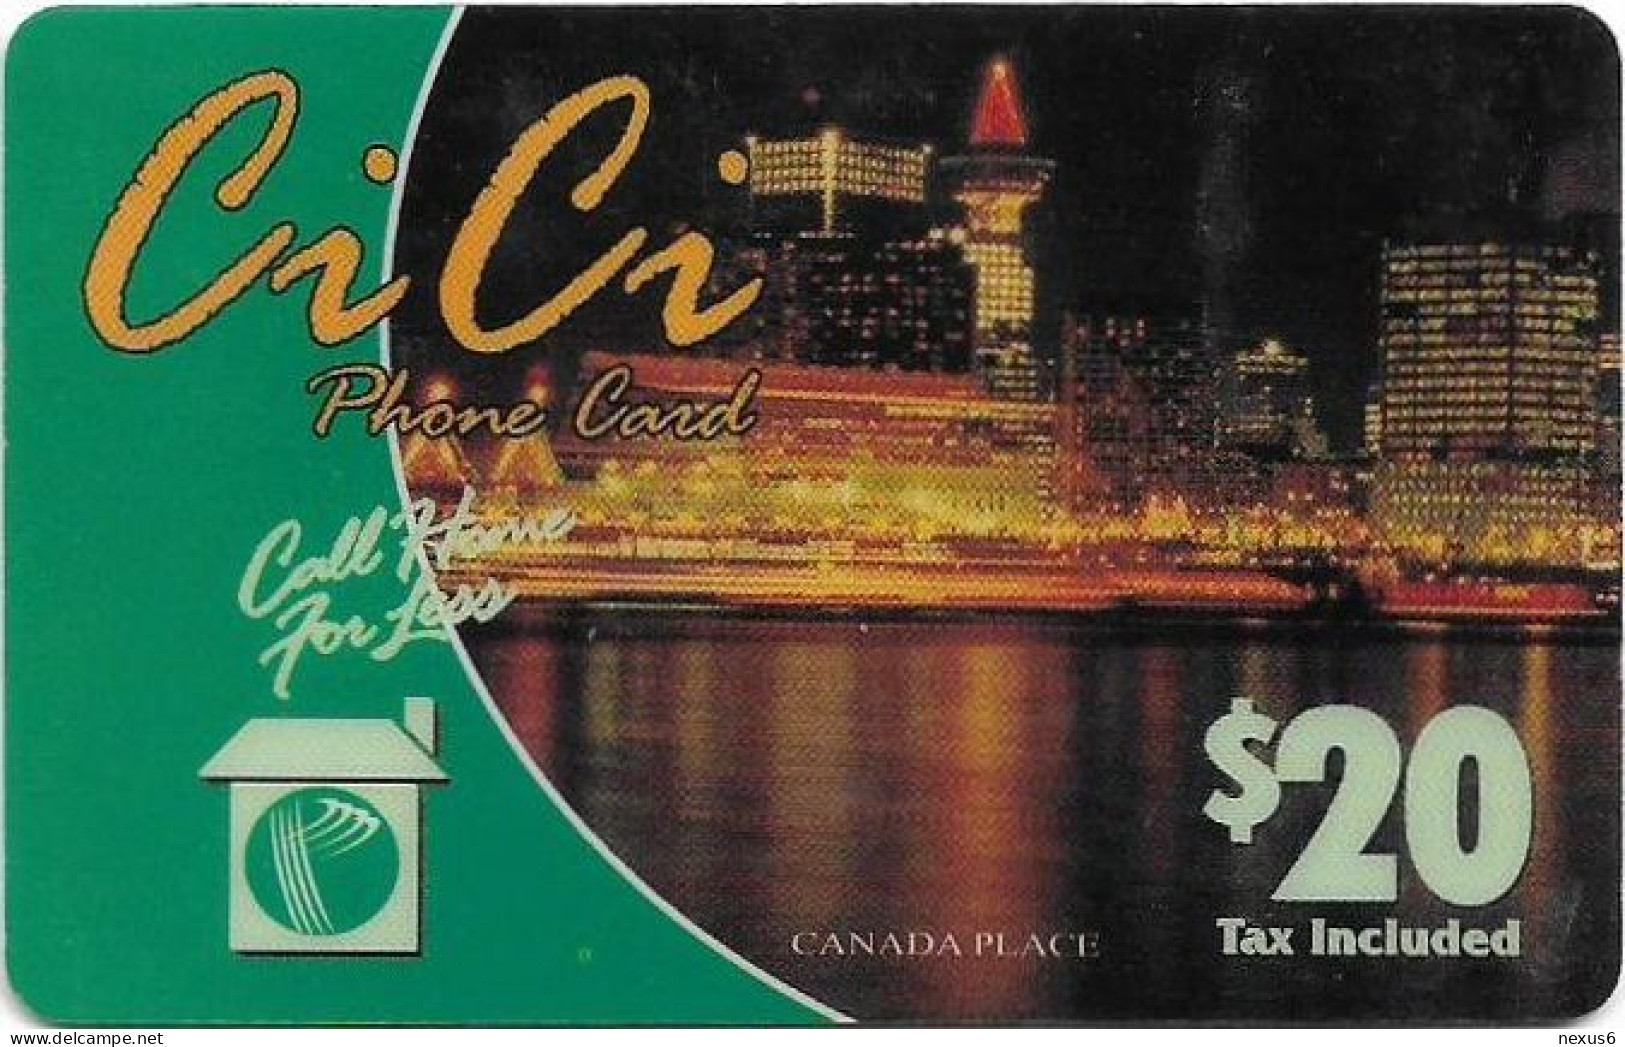 Canada - Profekta - CiCi - Canada Place, Remote Mem. 20$, Used - Canada